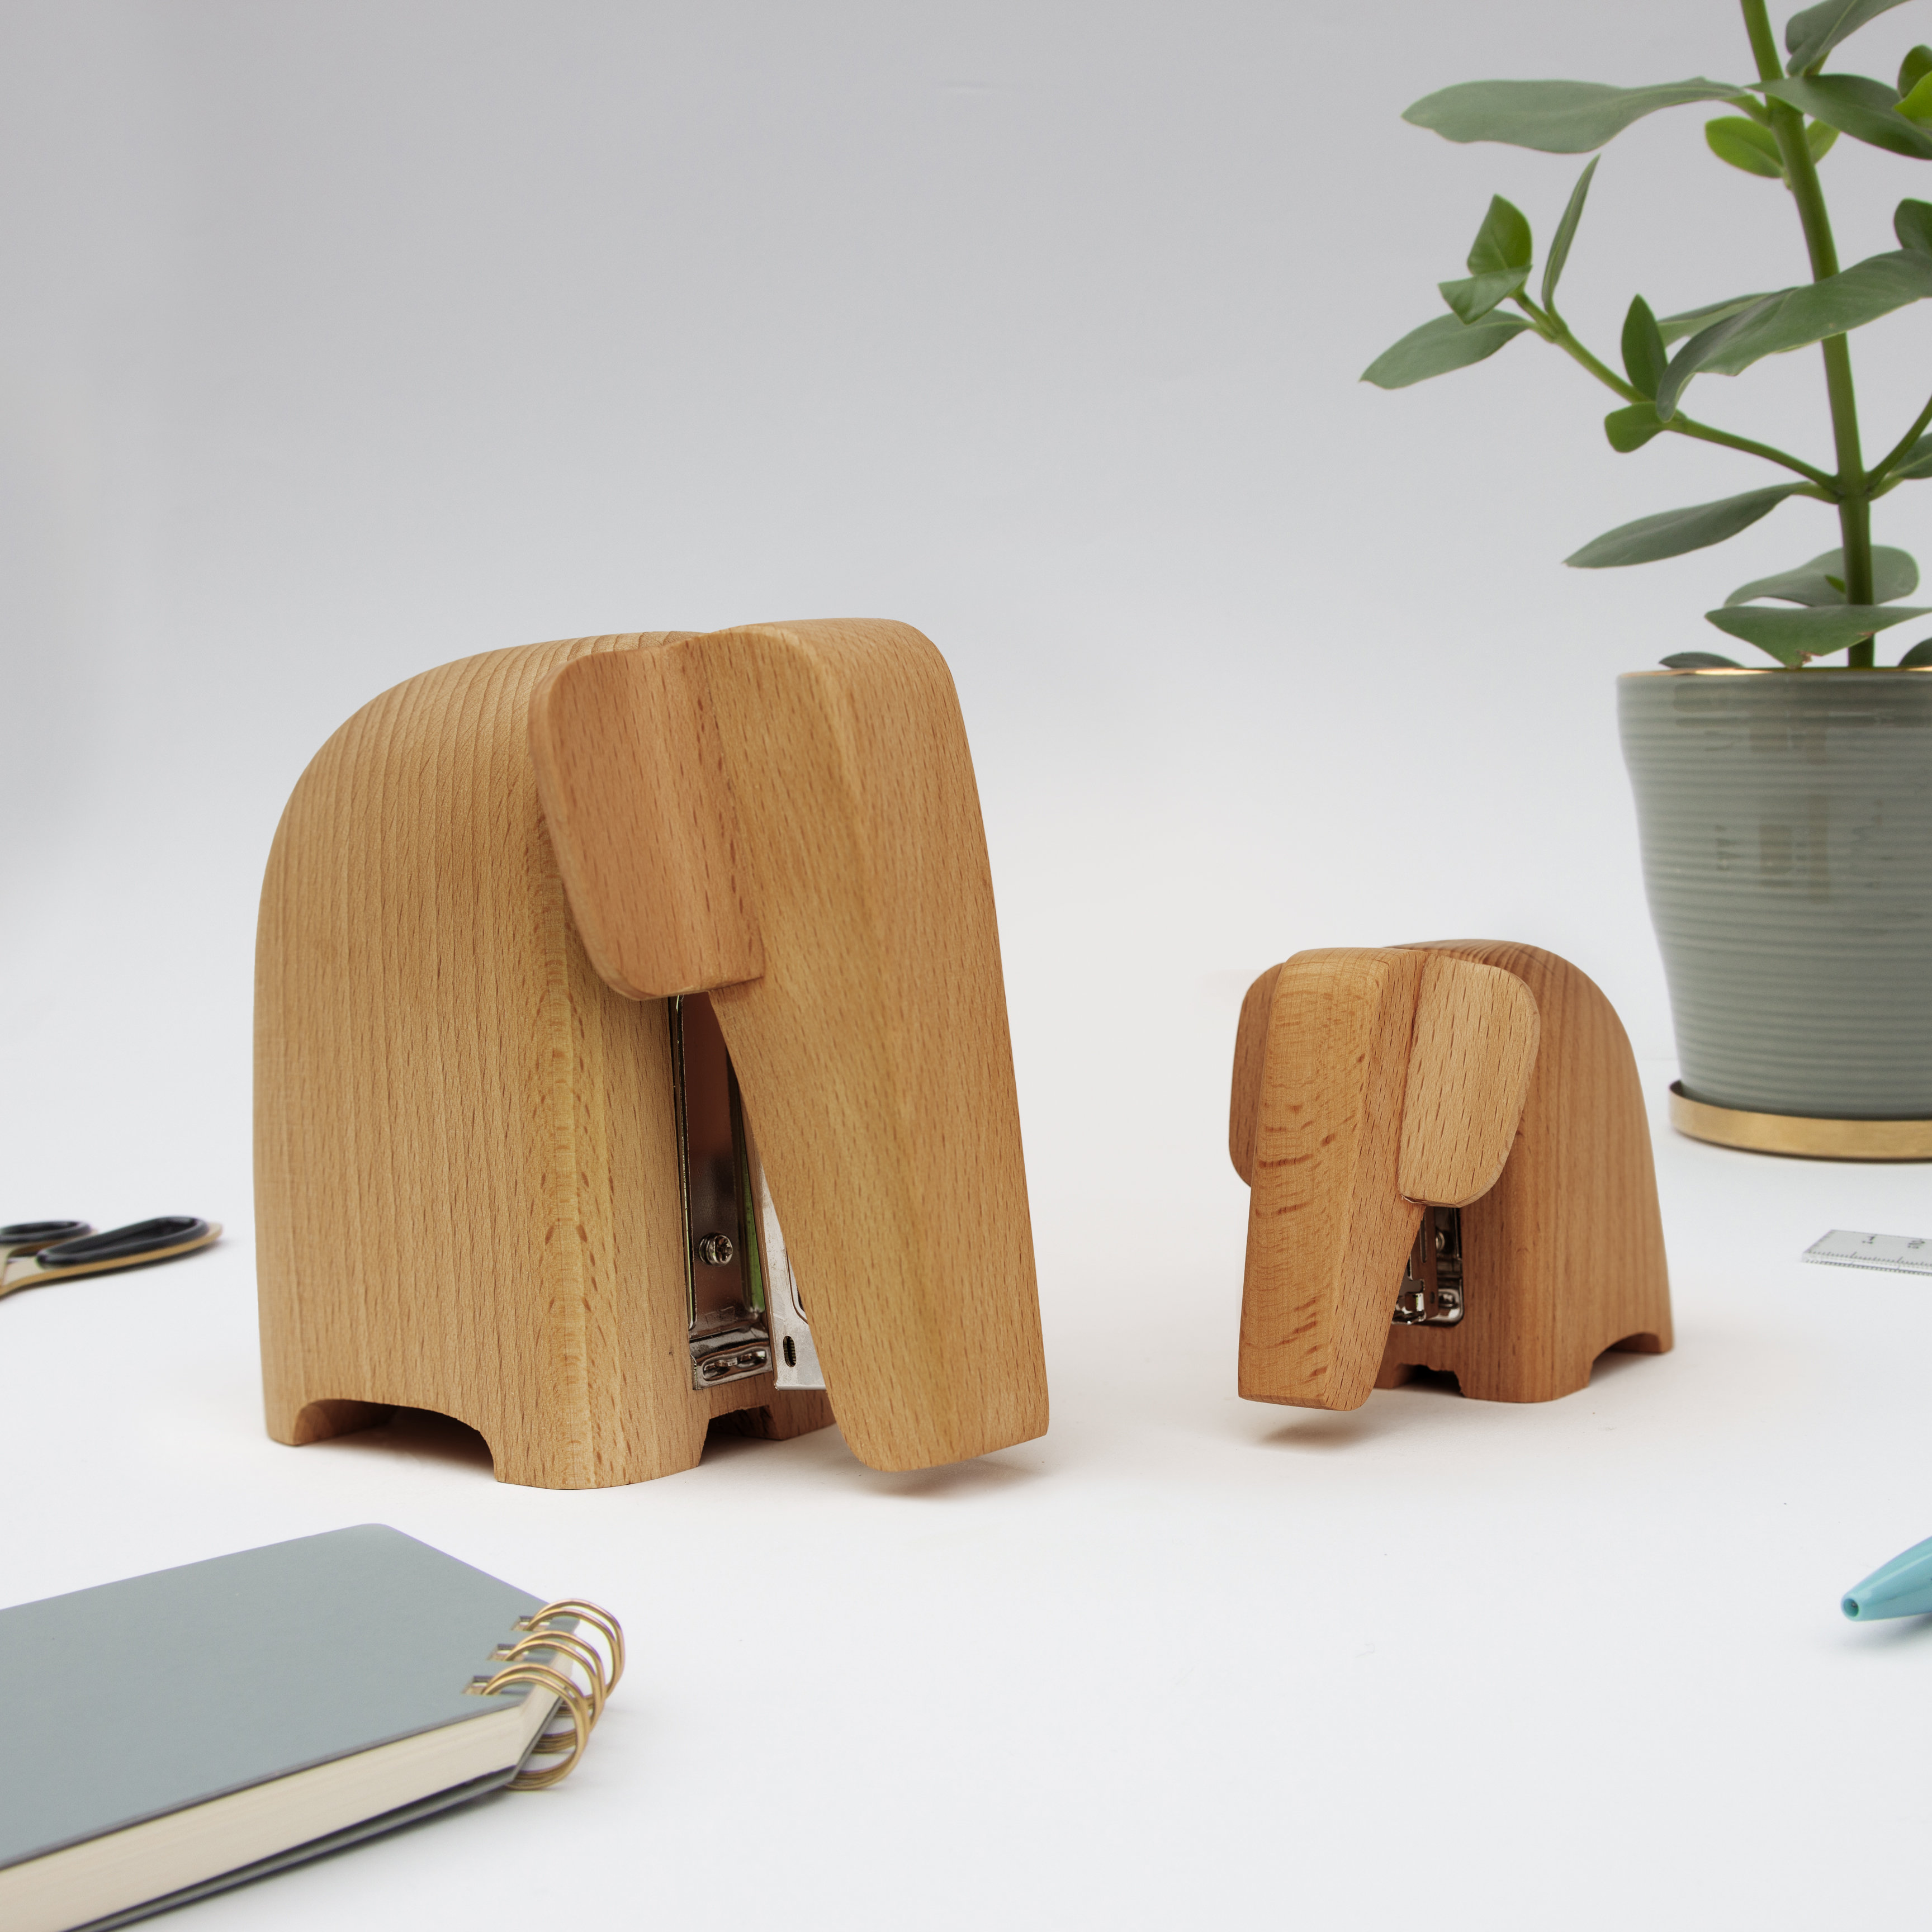 Pair of wooden elephant staplers